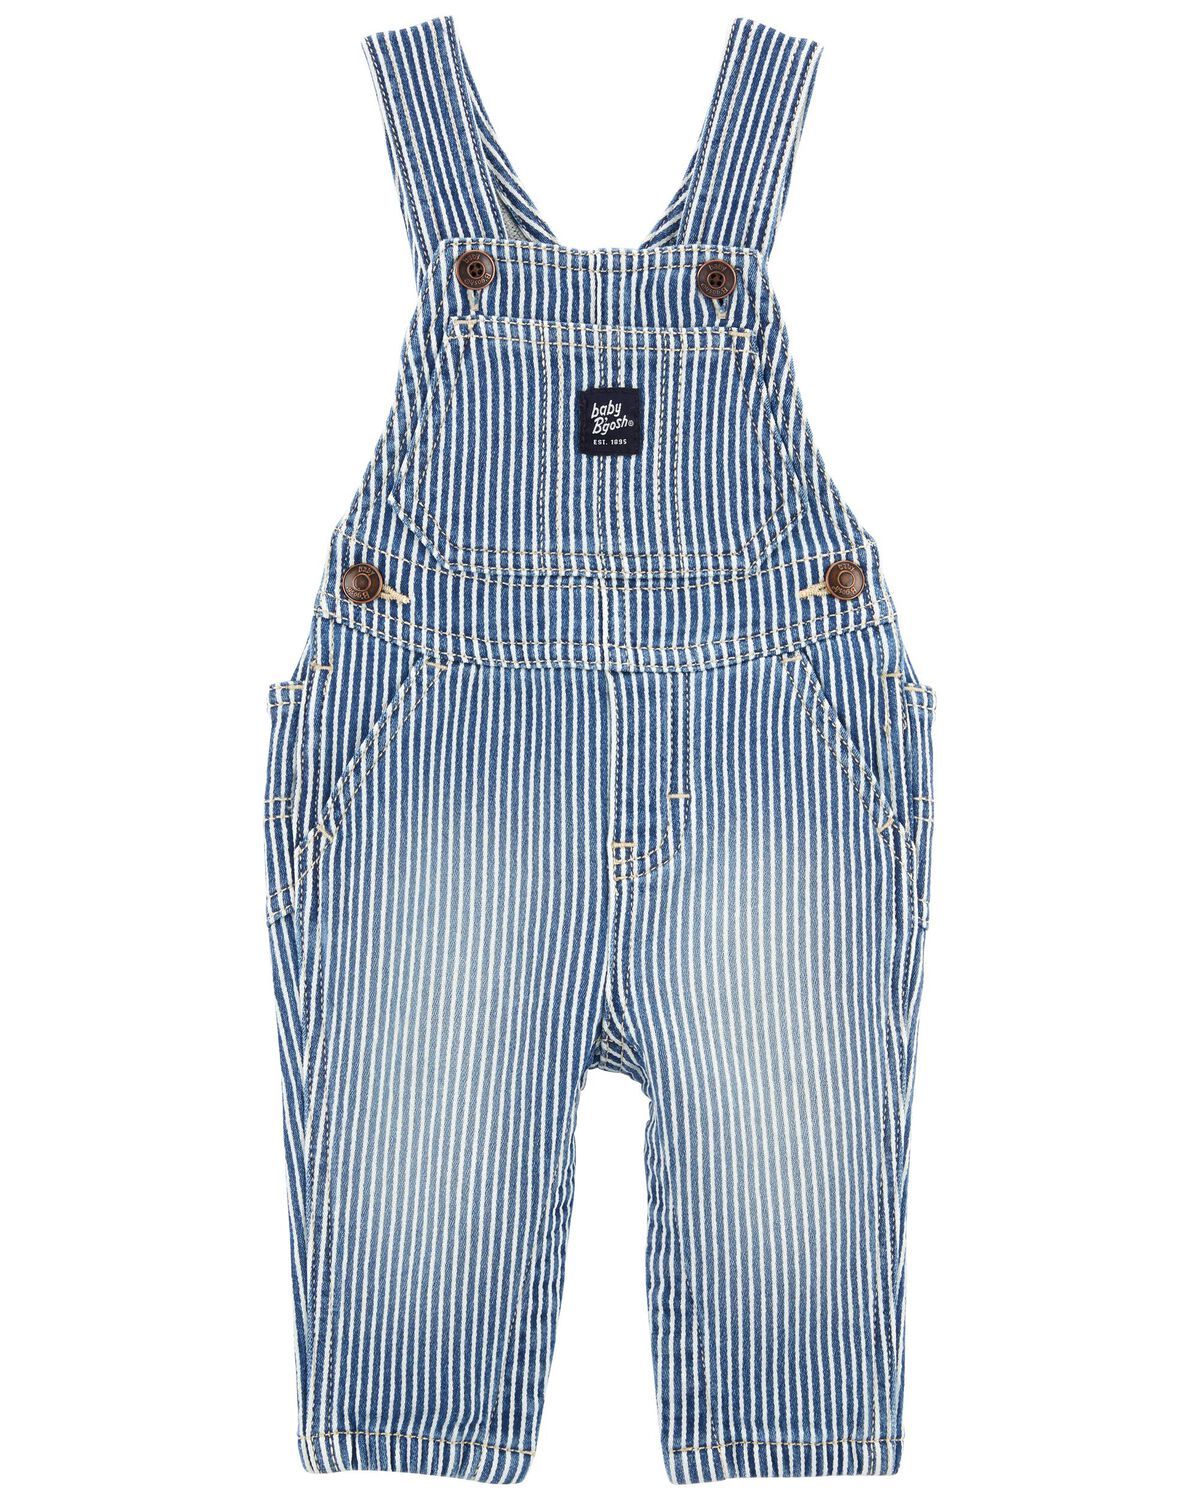 Blue Baby Knit-Like Denim Hickory Stripe Overalls | carters.com | Carter's